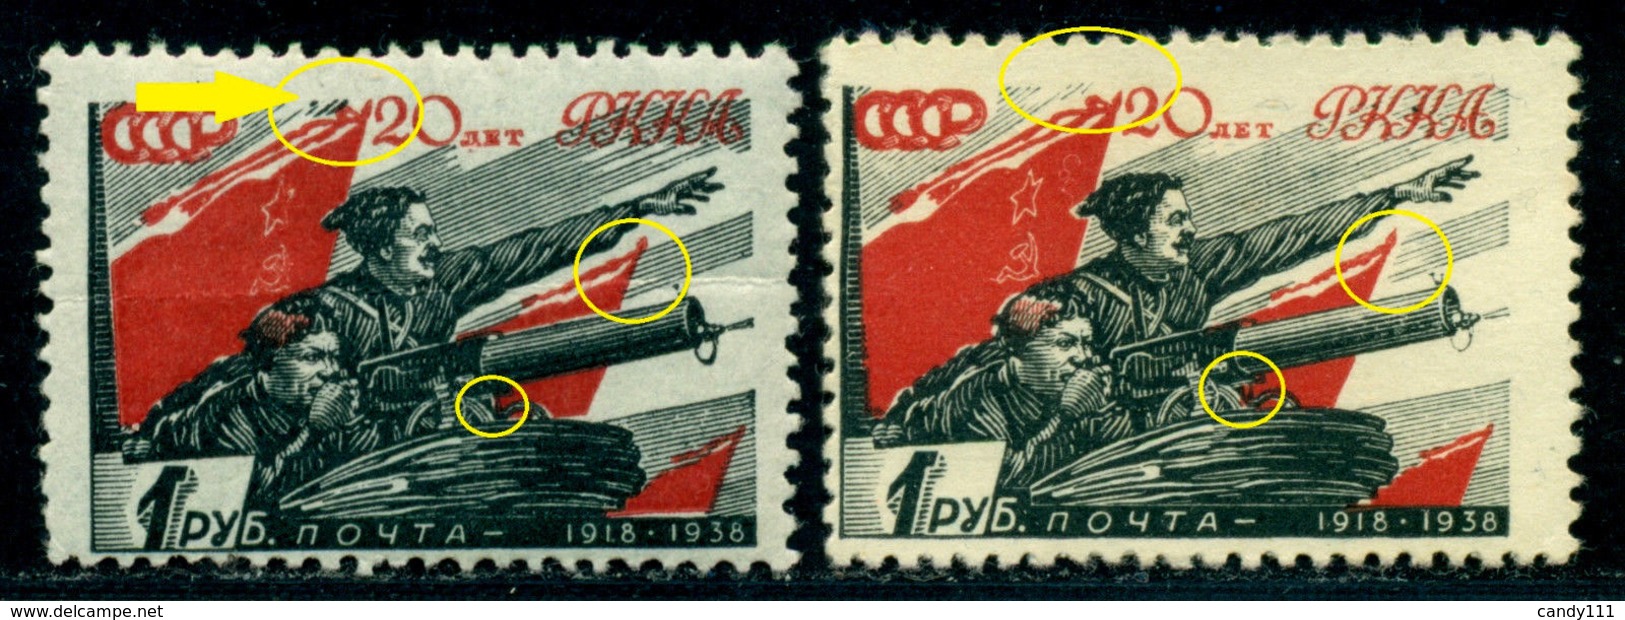 Russia 1938 Red Army,Chapayev,Petjka,Hero Of The Civil War,Mi.588,MNH,ERROR - Errors & Oddities